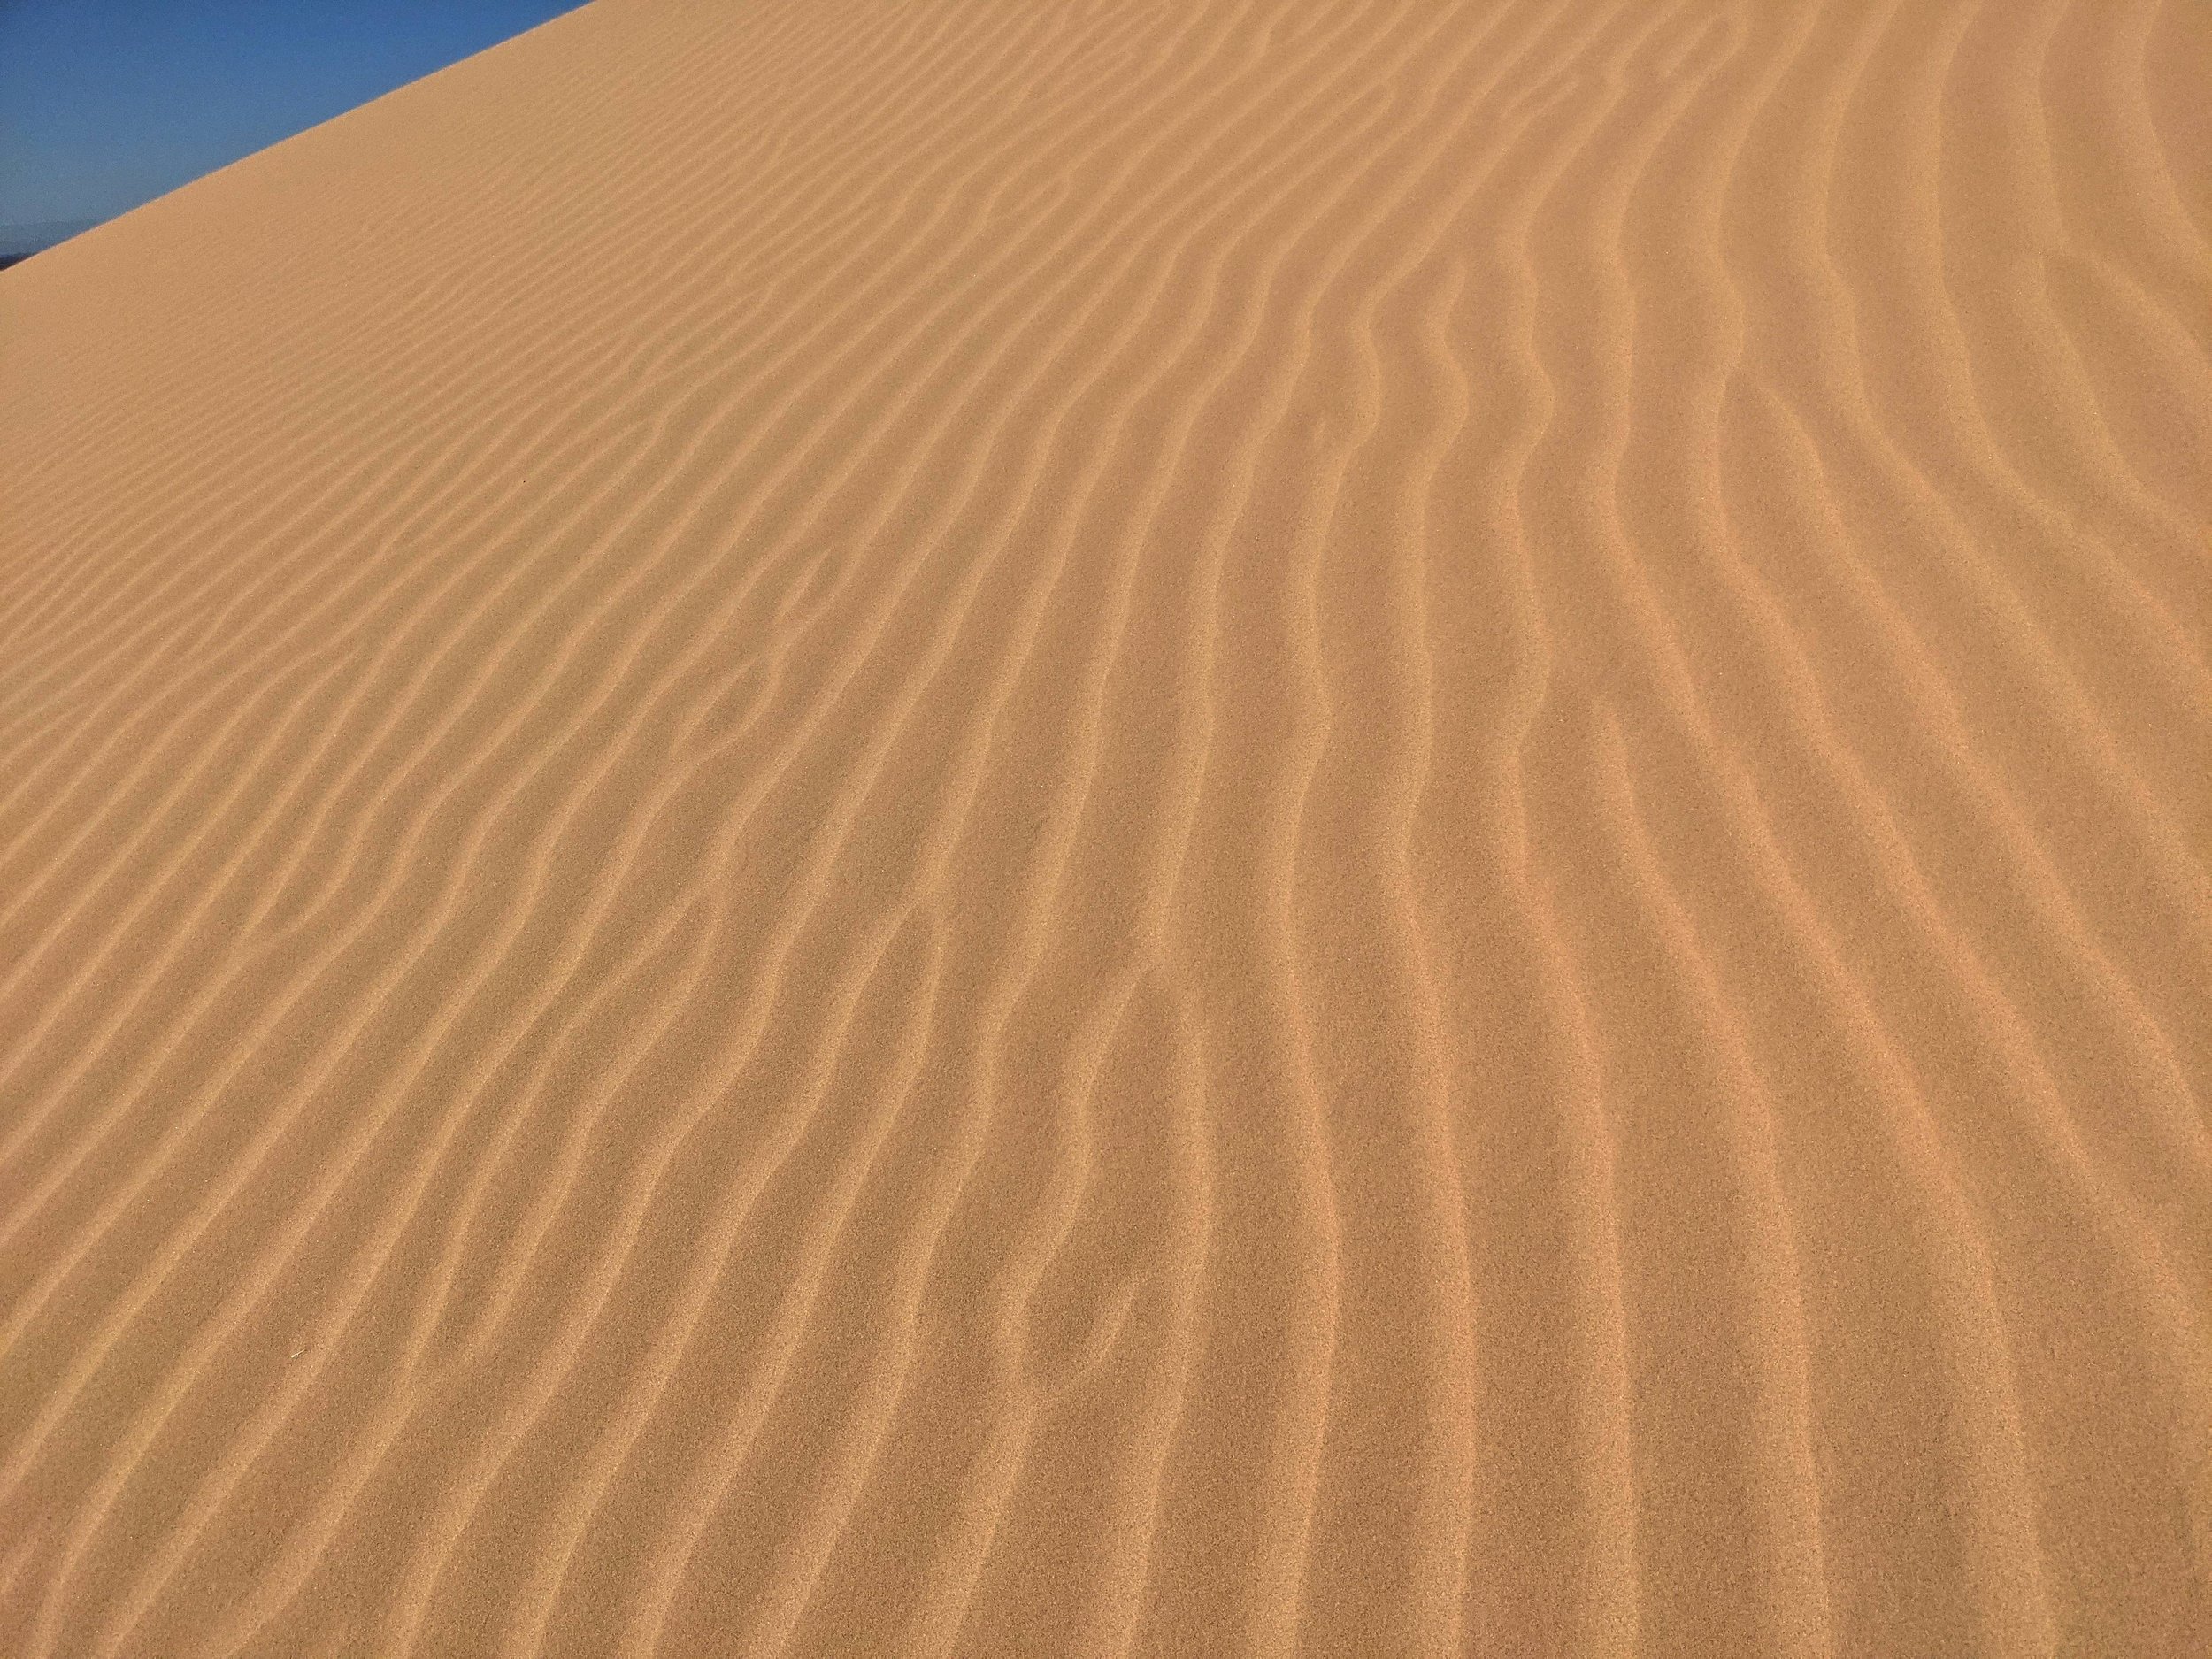 California-Sand-Dune-Texture-Up-Close.jpg